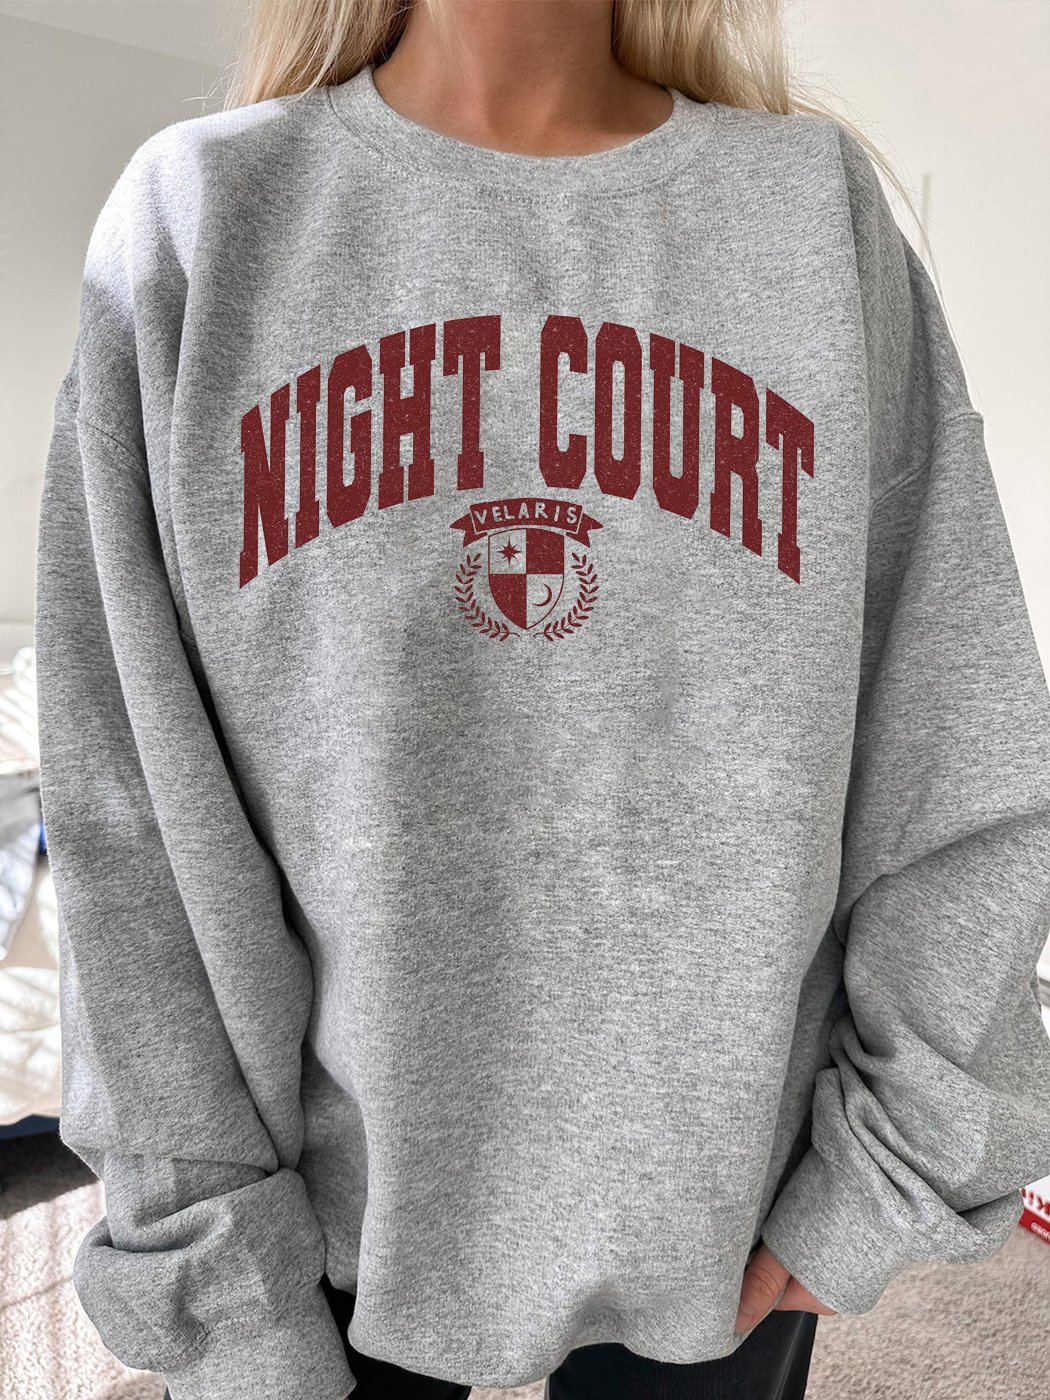 The Night Court Sweatshirt, Velaris Sweatshirt / [blueesa] /